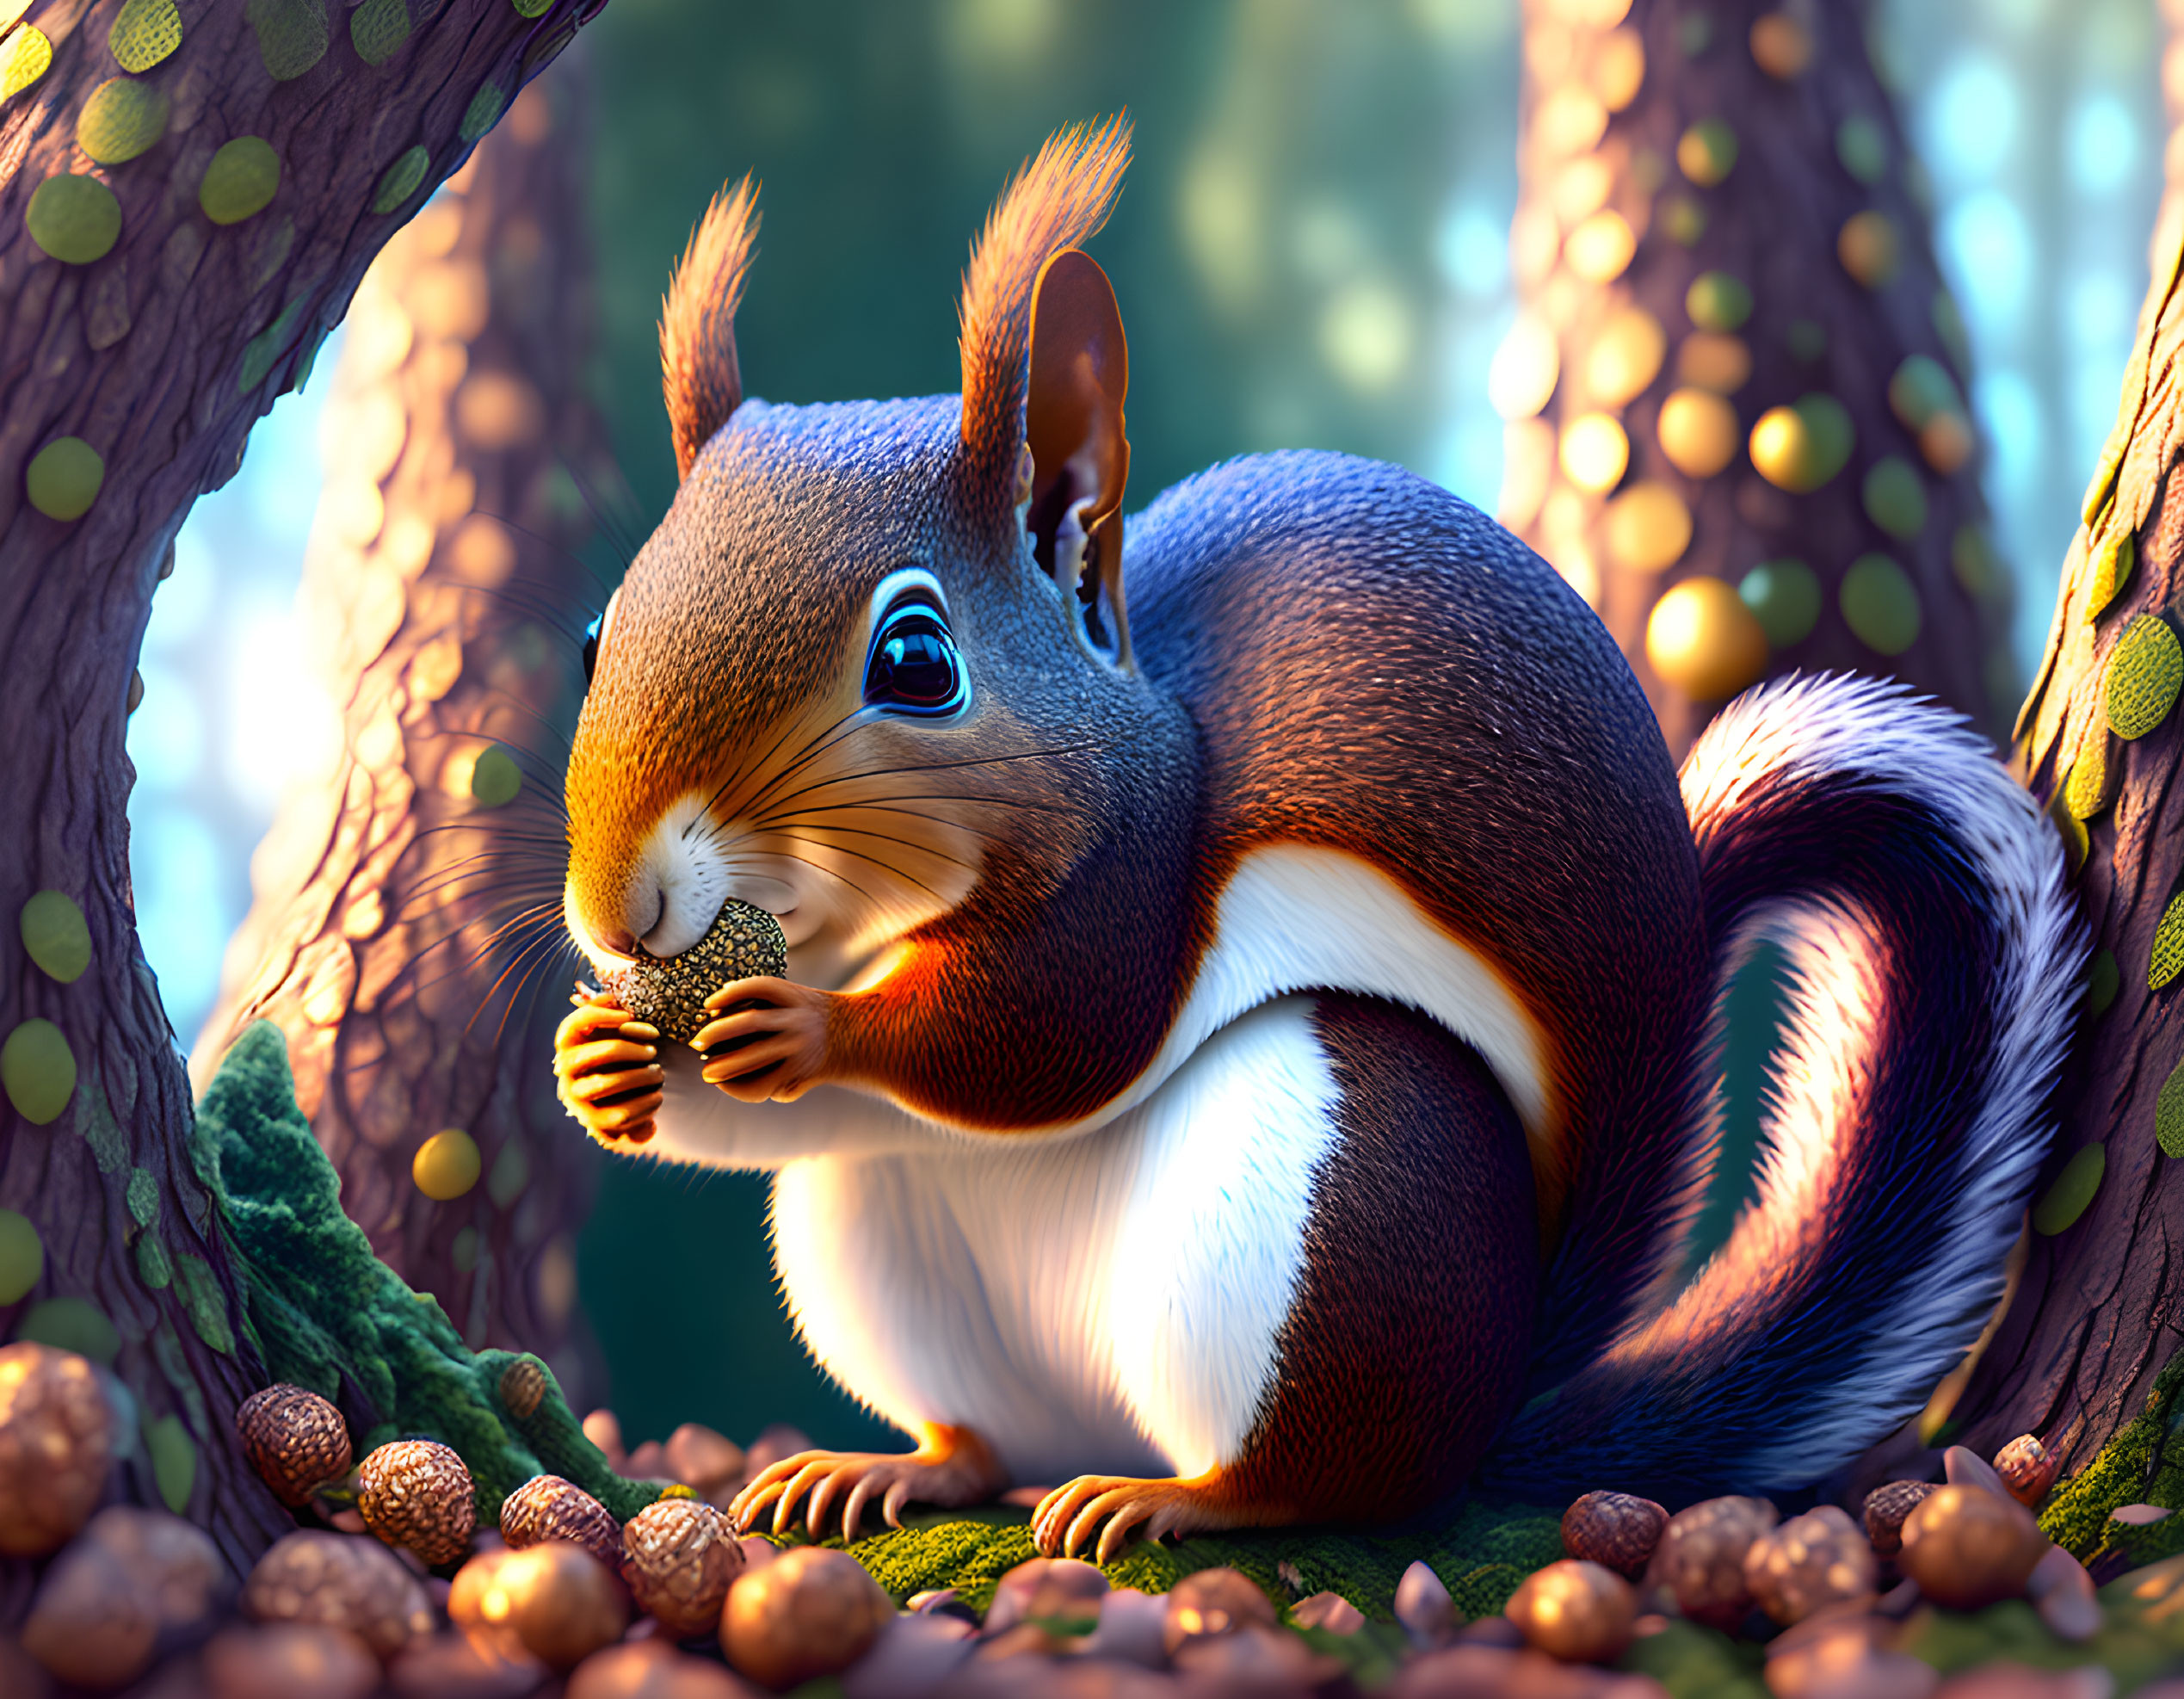 Detailed Illustration: Squirrel Eating Nut in Sunlit Forest